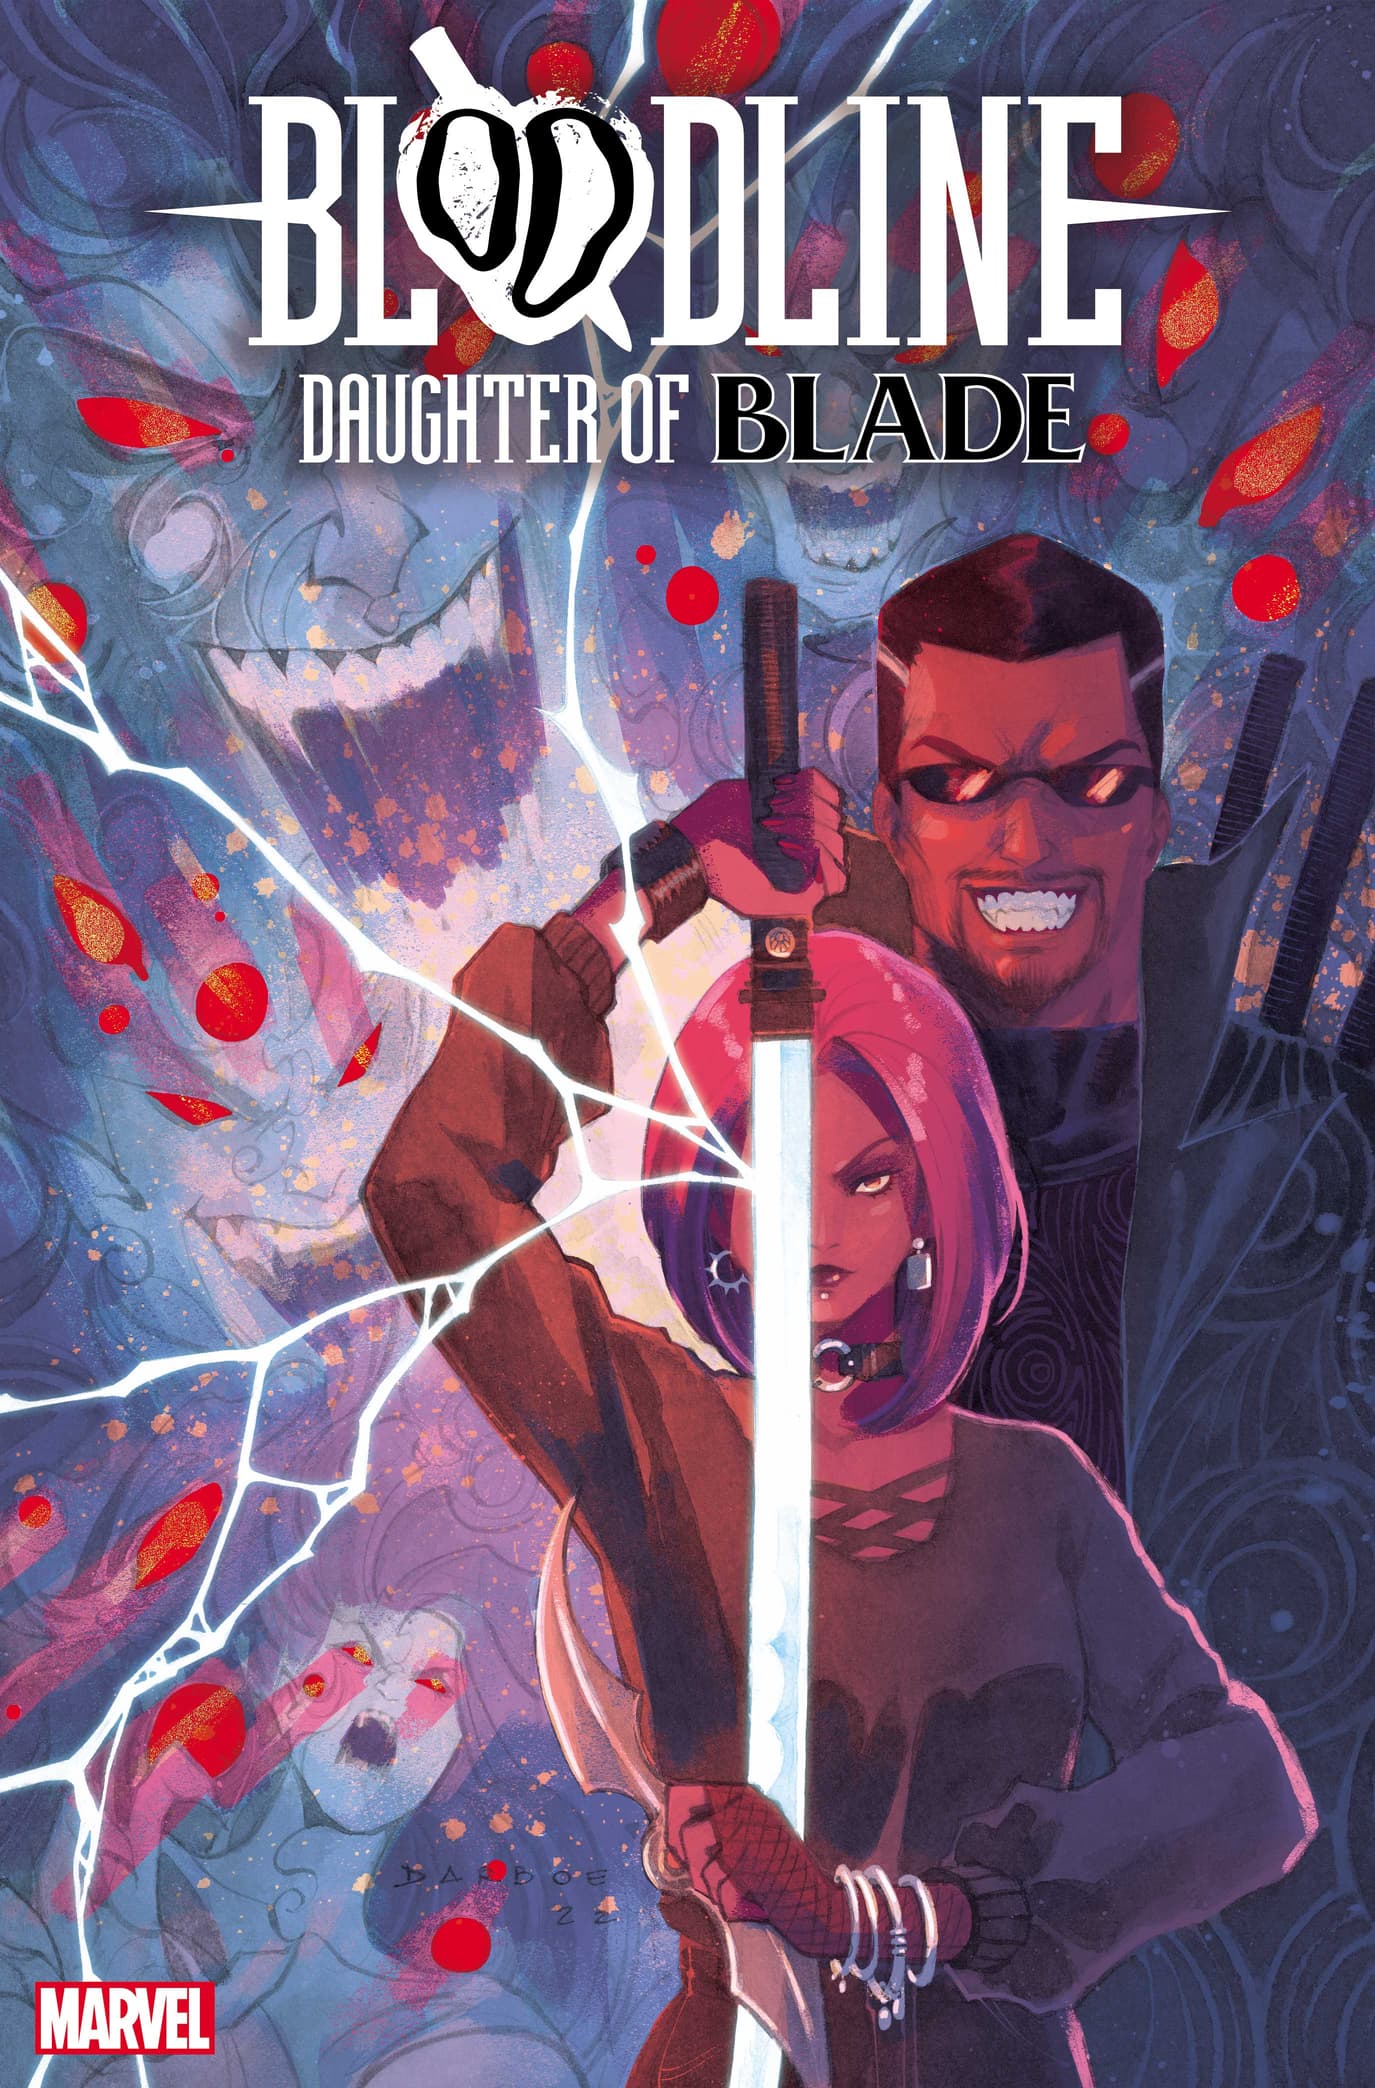 BLOODLINE: DAUGHTER OF BLADE #1 cover by Karen S. Darboe